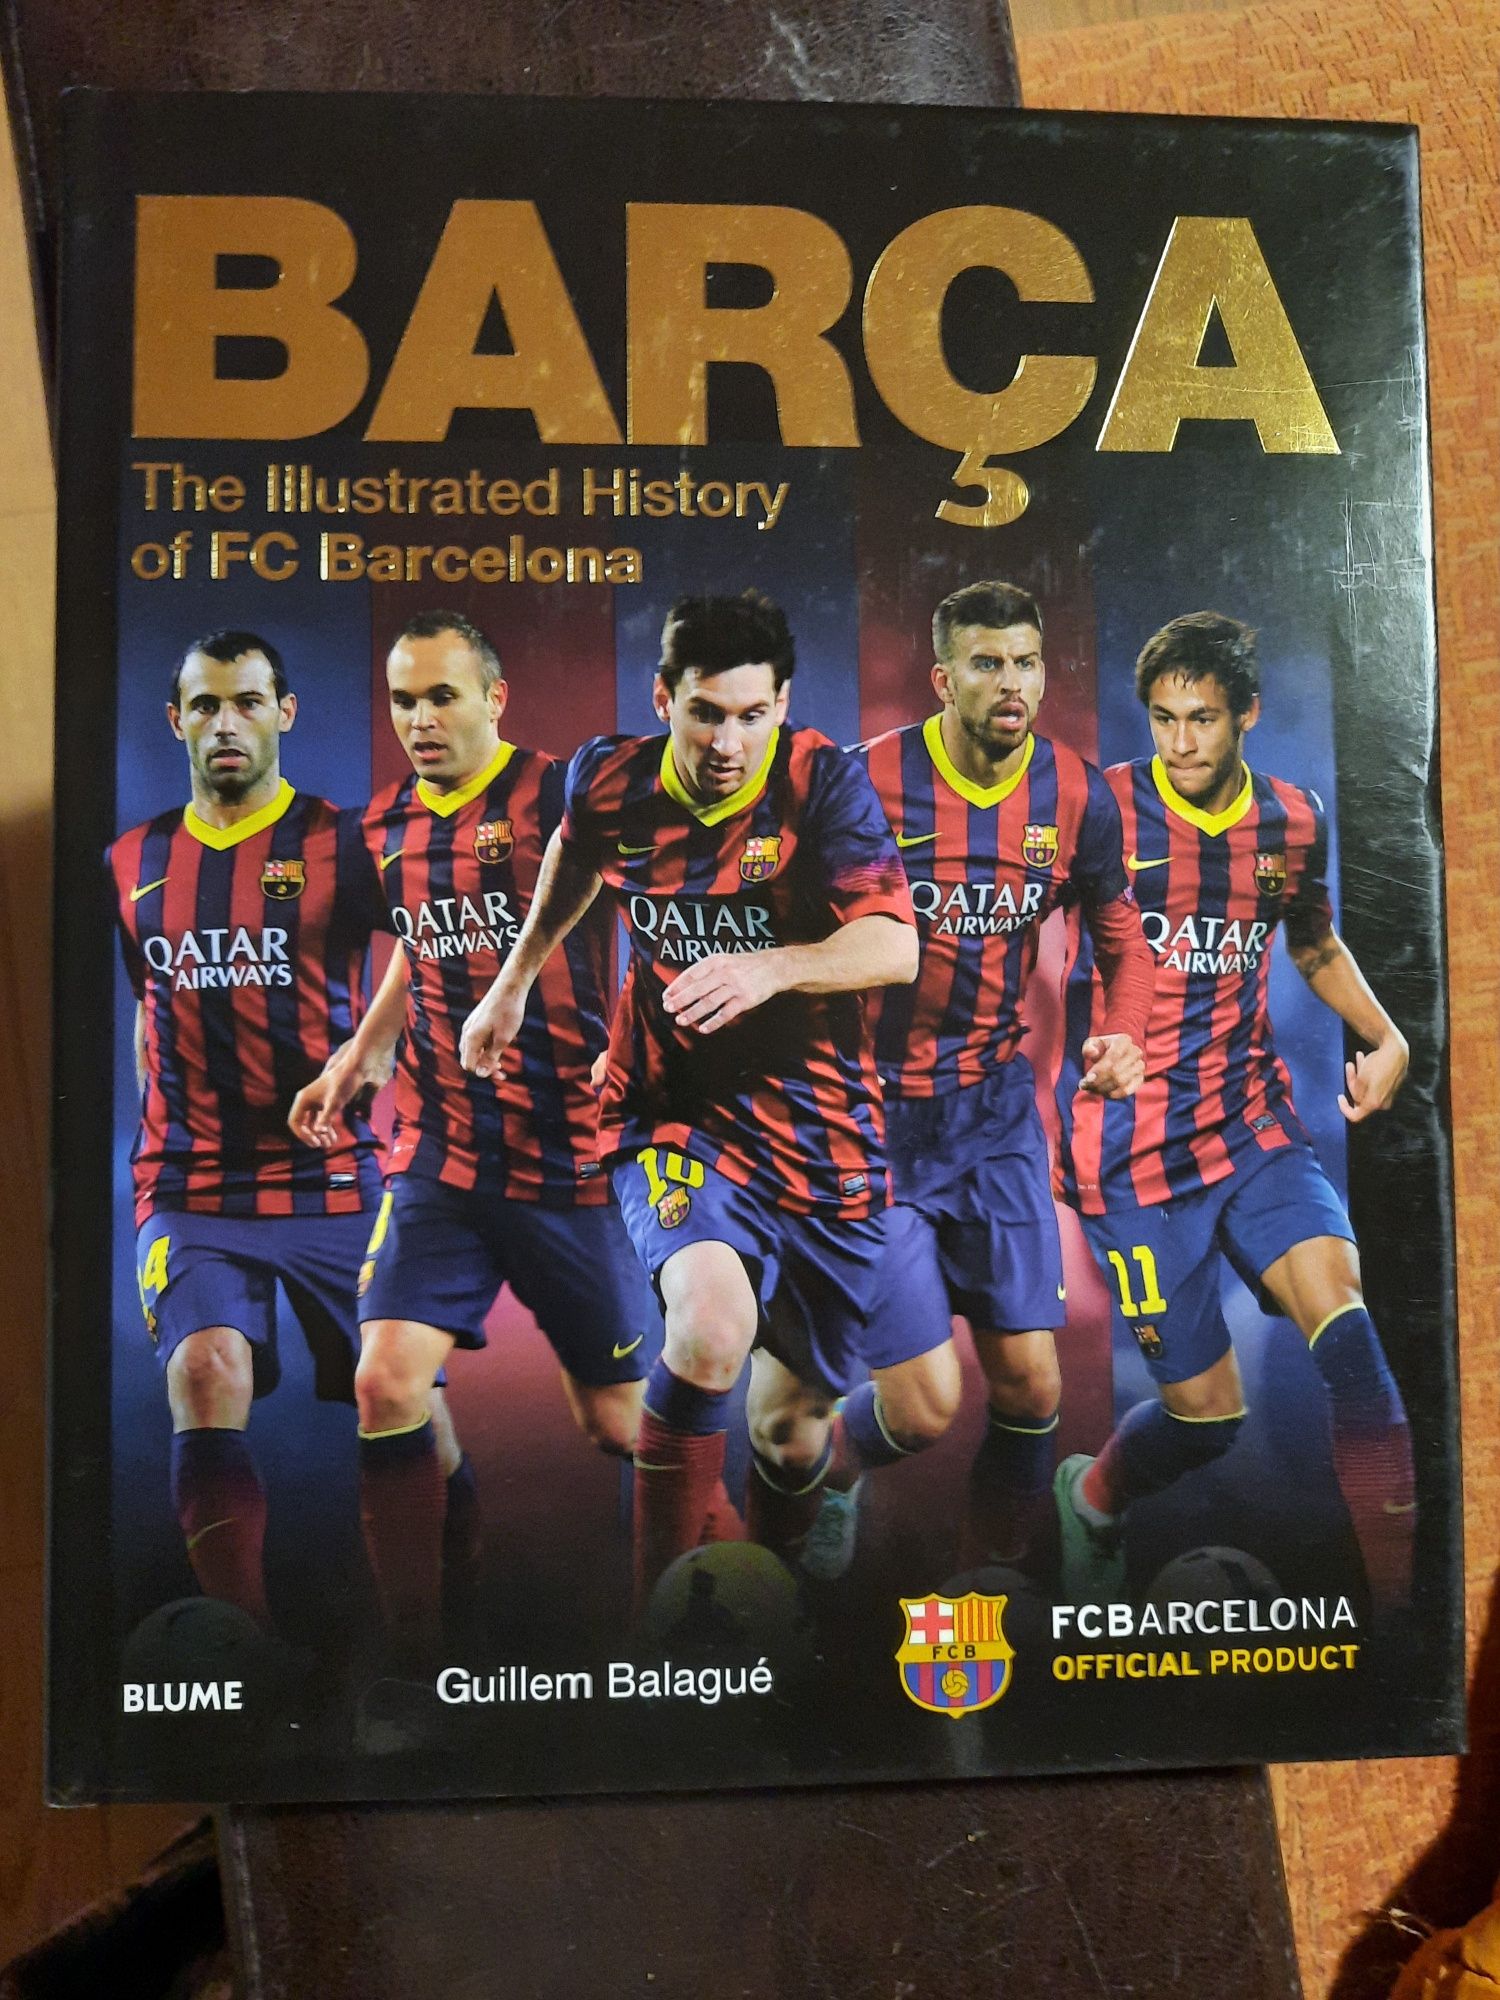 Barça - illustrated History of FC Barcelona